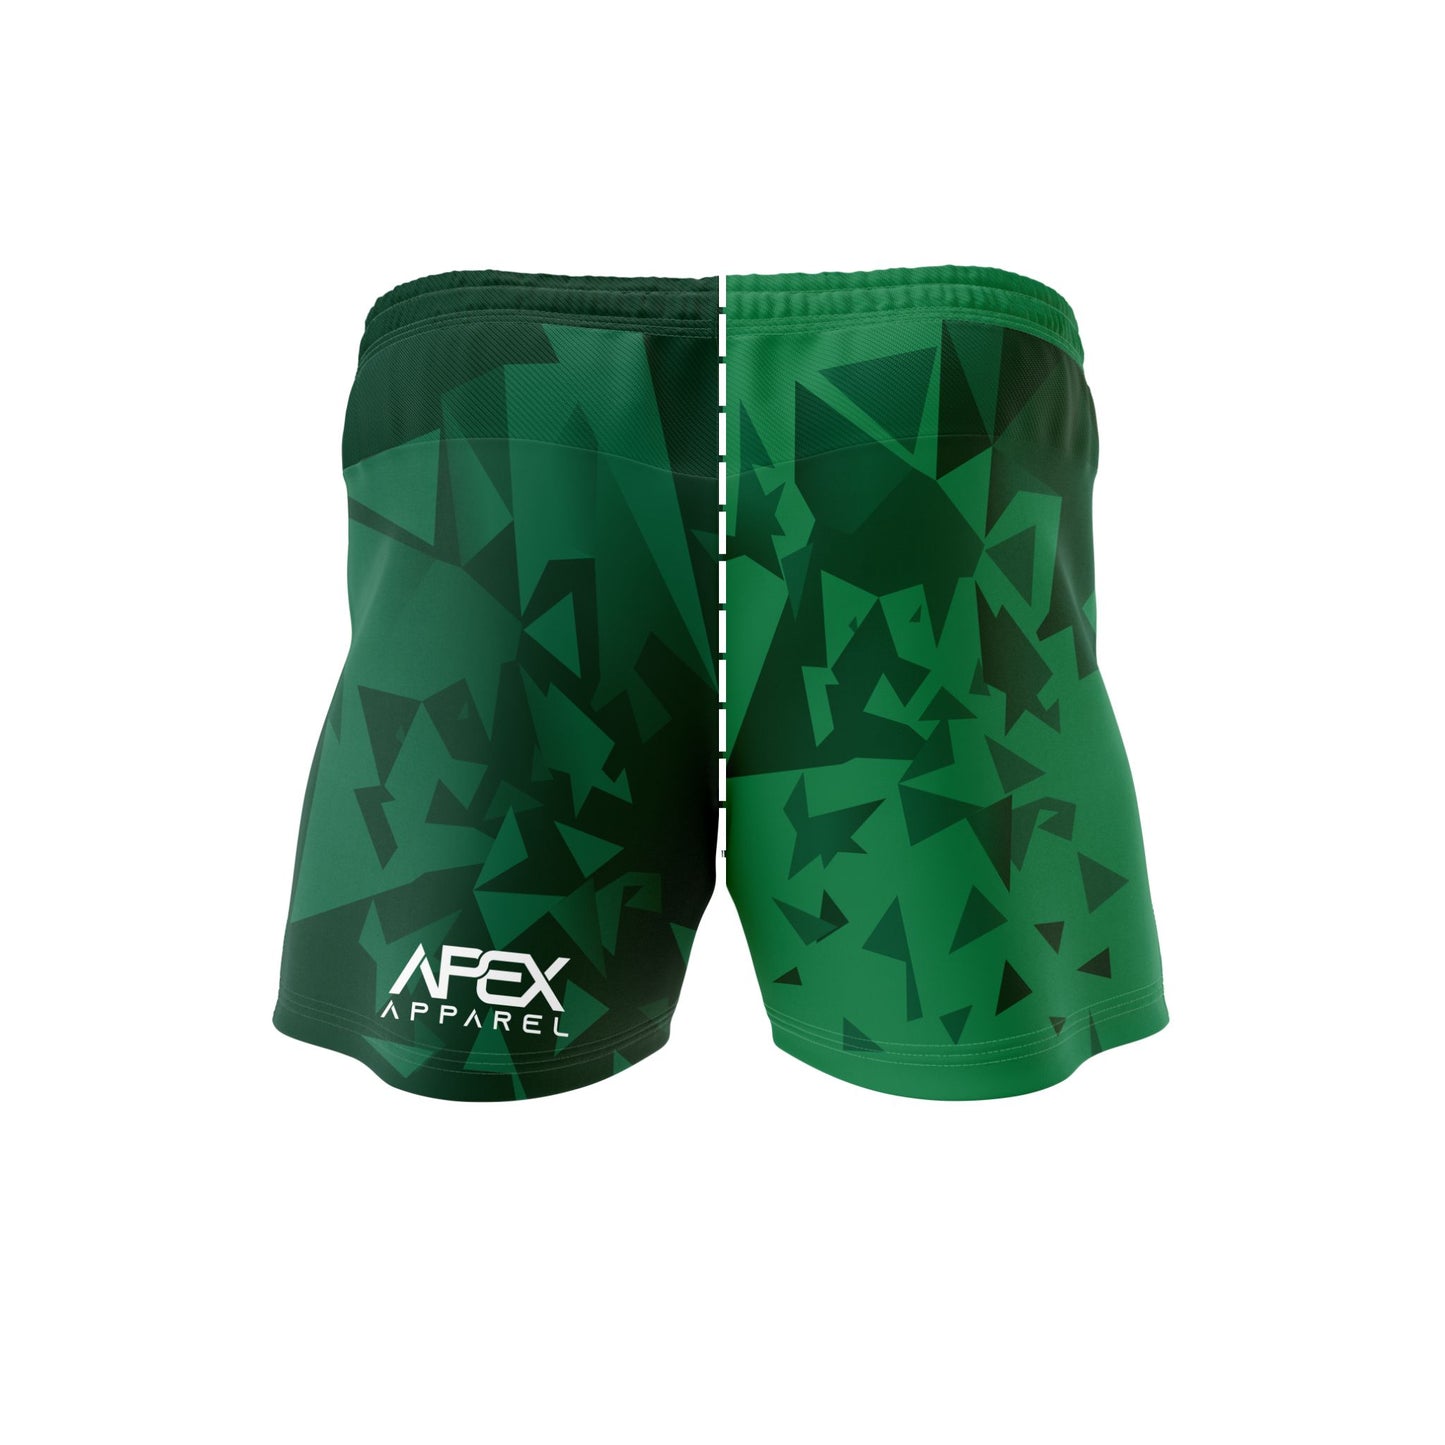 Custom Reversible Soccer Shorts - Pinnacle